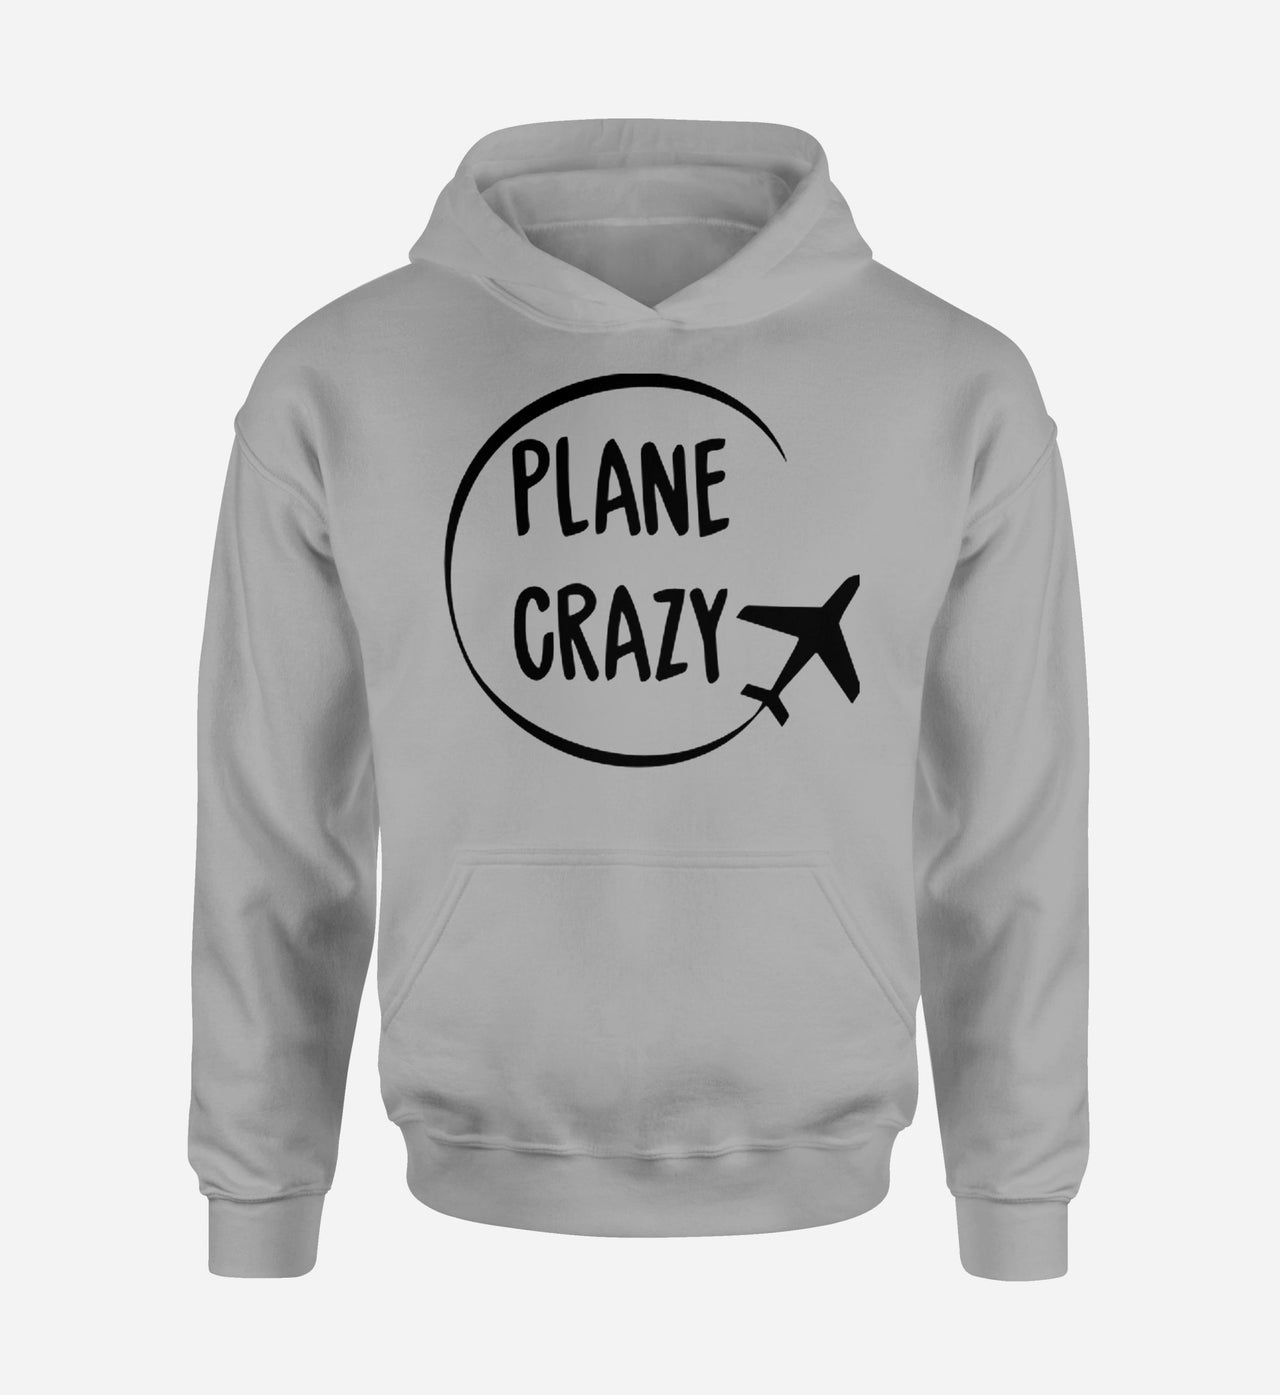 Plane Crazy Designed Hoodies